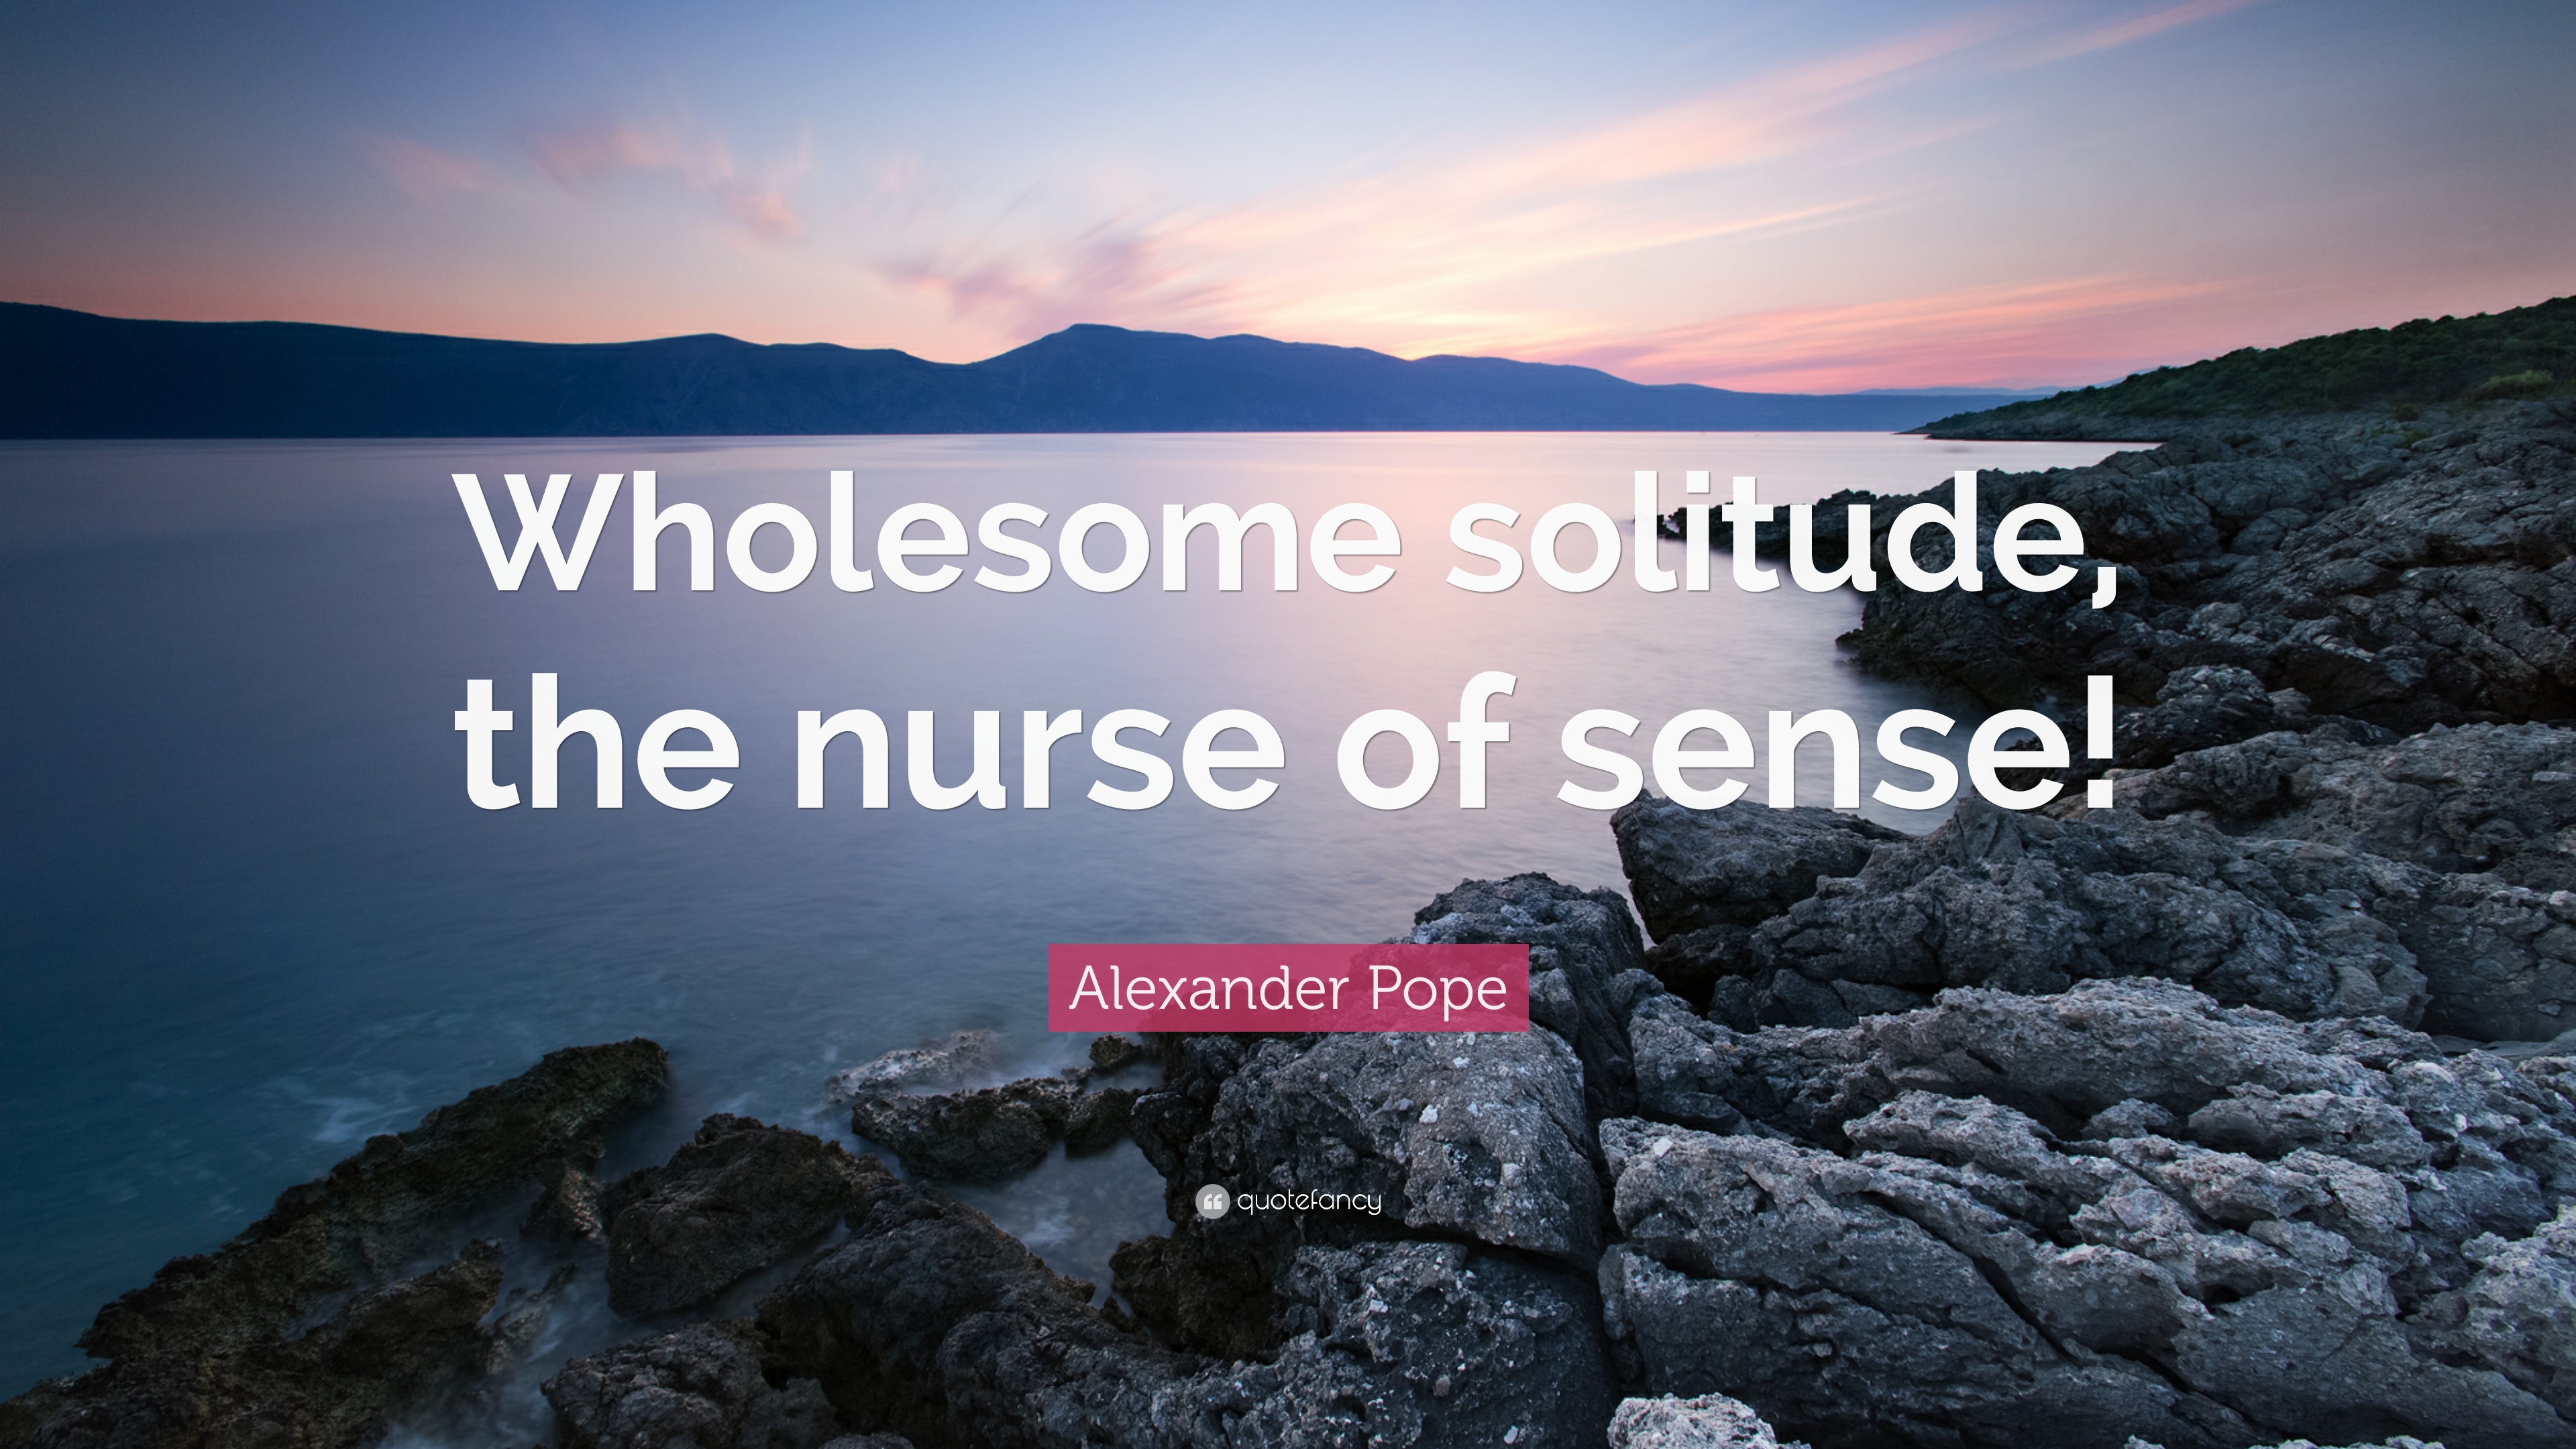 Alexander Pope Quote: “Wholesome solitude, the nurse